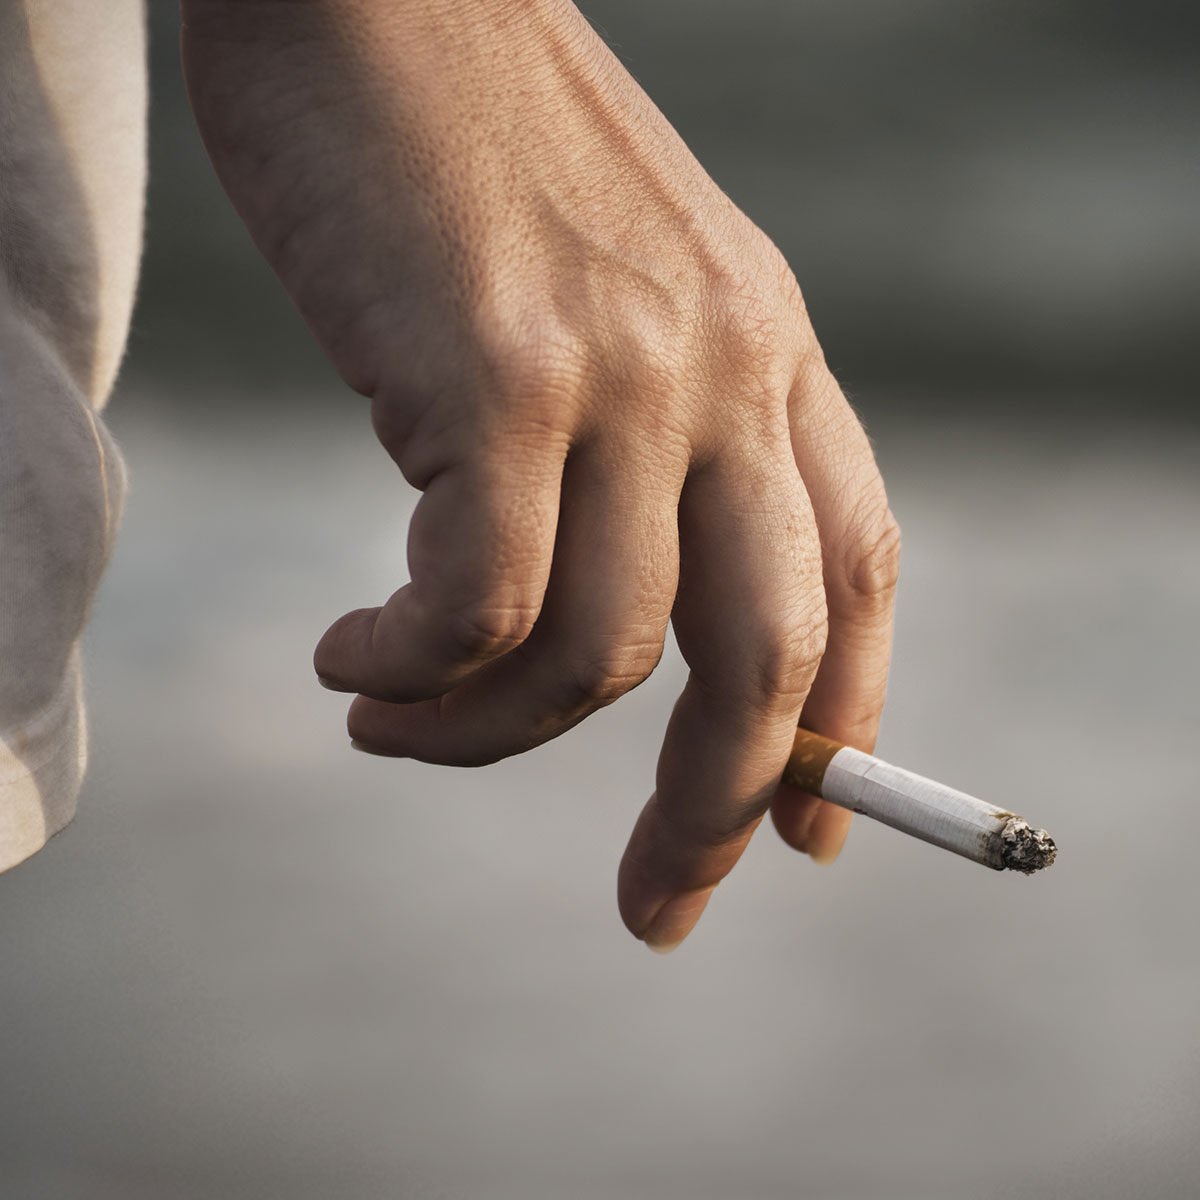 Solo 17% fumatori italiani ha infor...